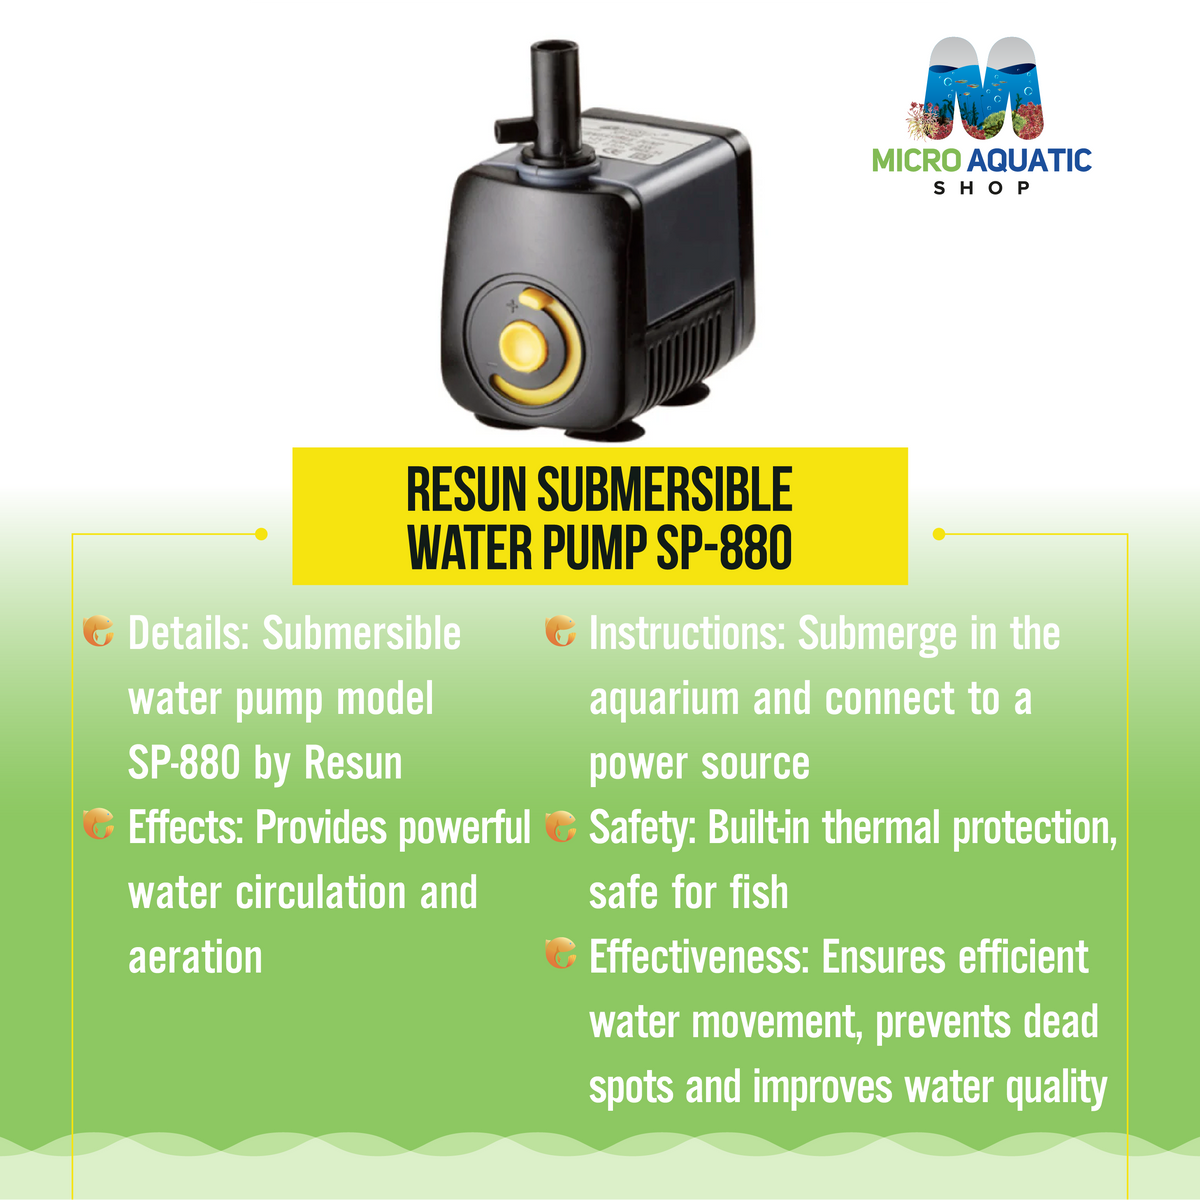 Resun Submersible Water Pump SP-880